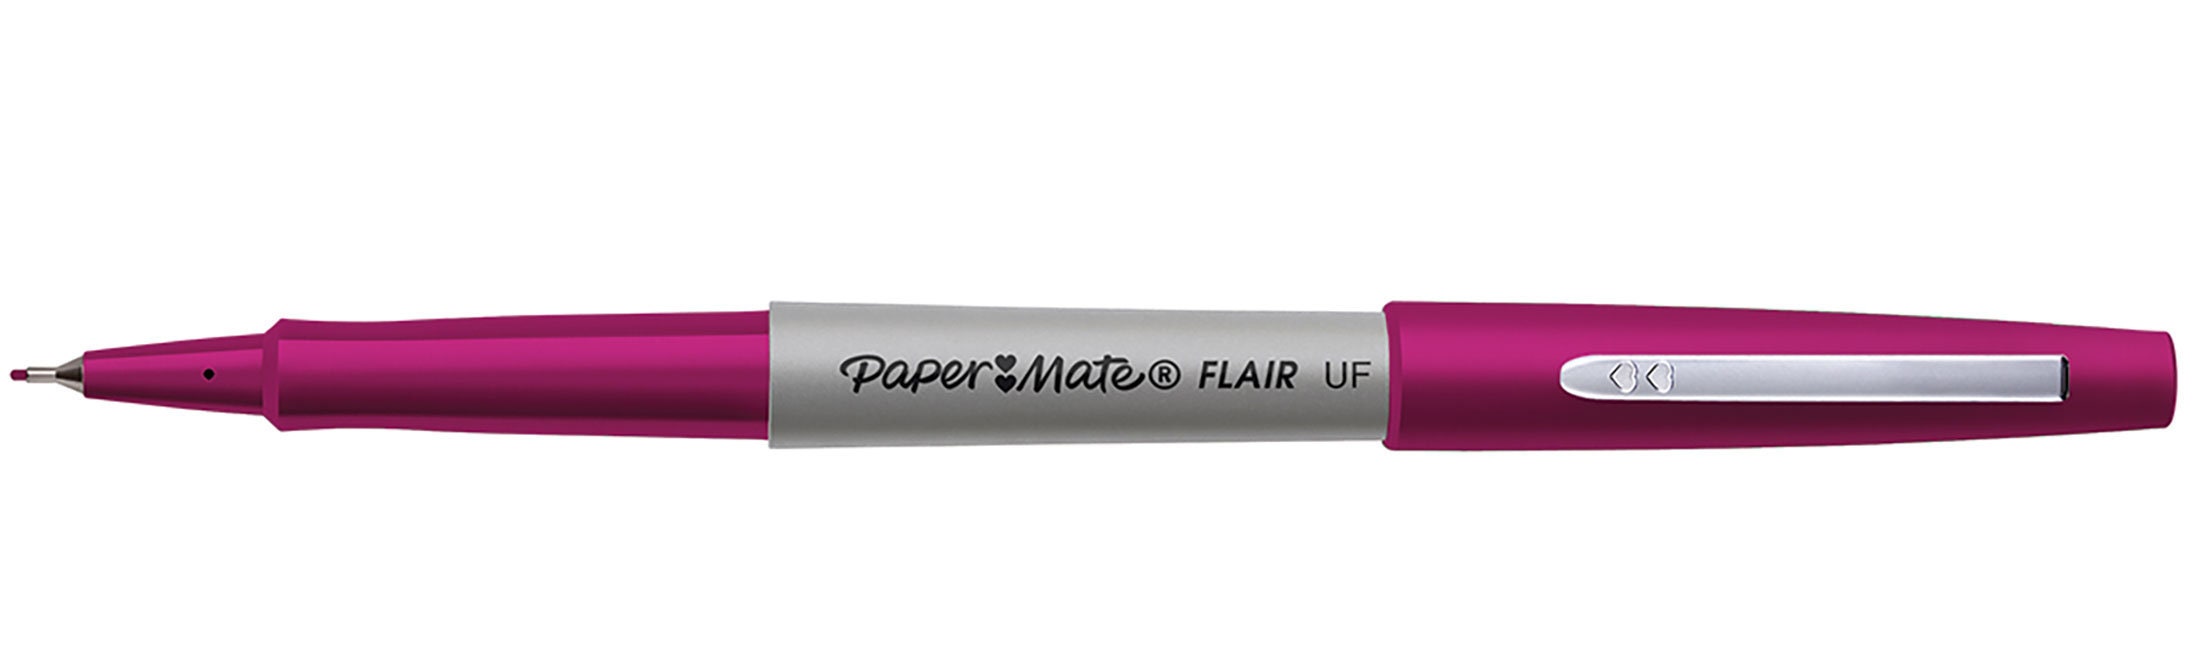 Paper Mate Flair Magenta Ultra Fine Felt Tip Pens Pack of 6Pens and Pencils